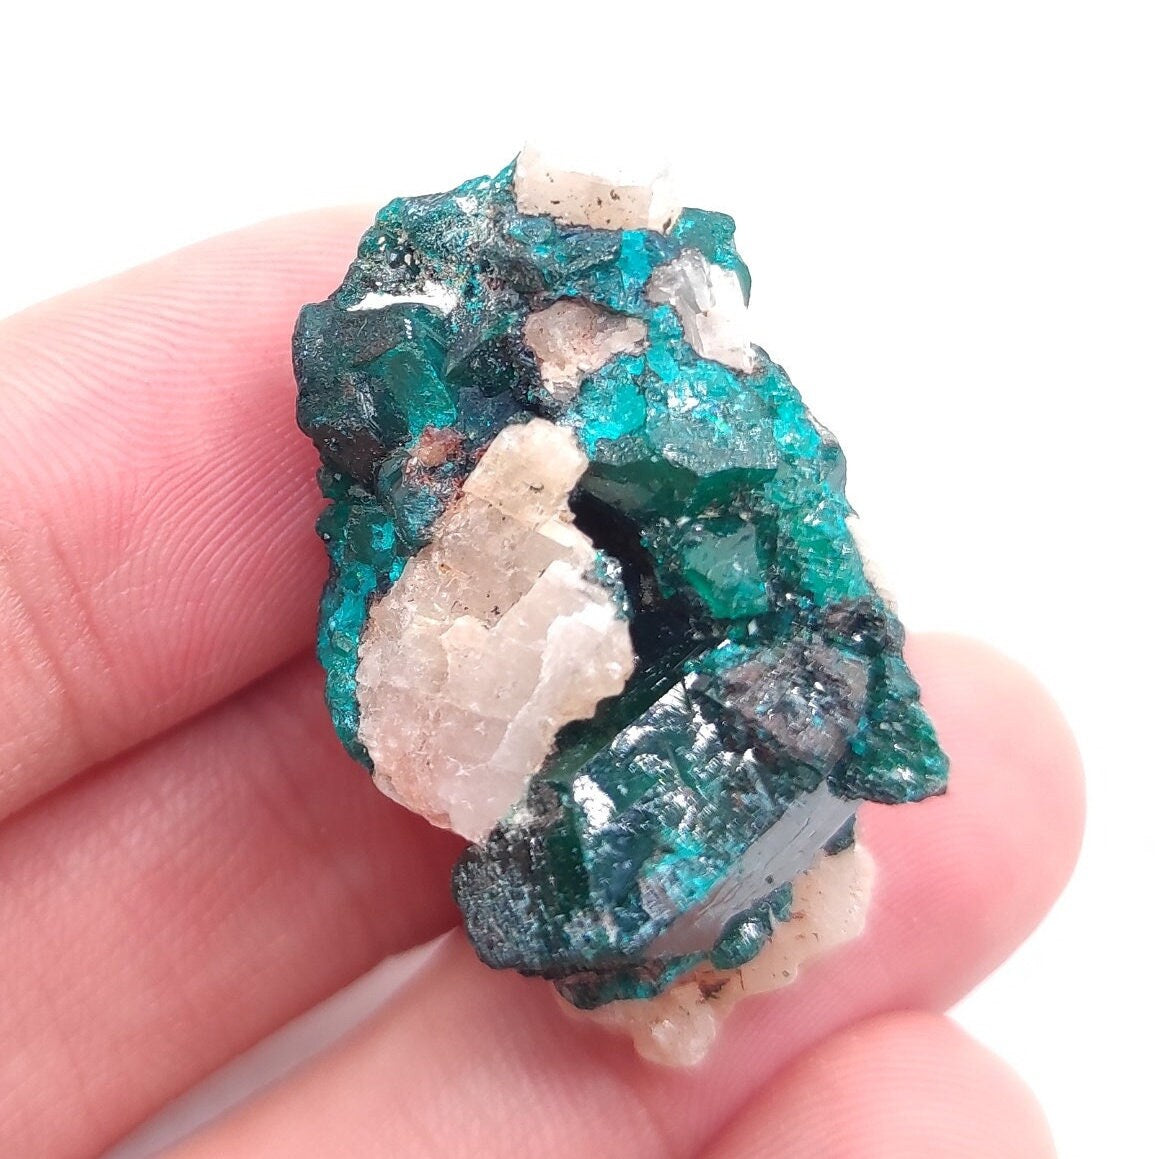 14g Dioptase Crystal from Congo - Natural Green Dioptase Mineral Specimen - Small Dioptase Specimen - Raw Dioptase Gem